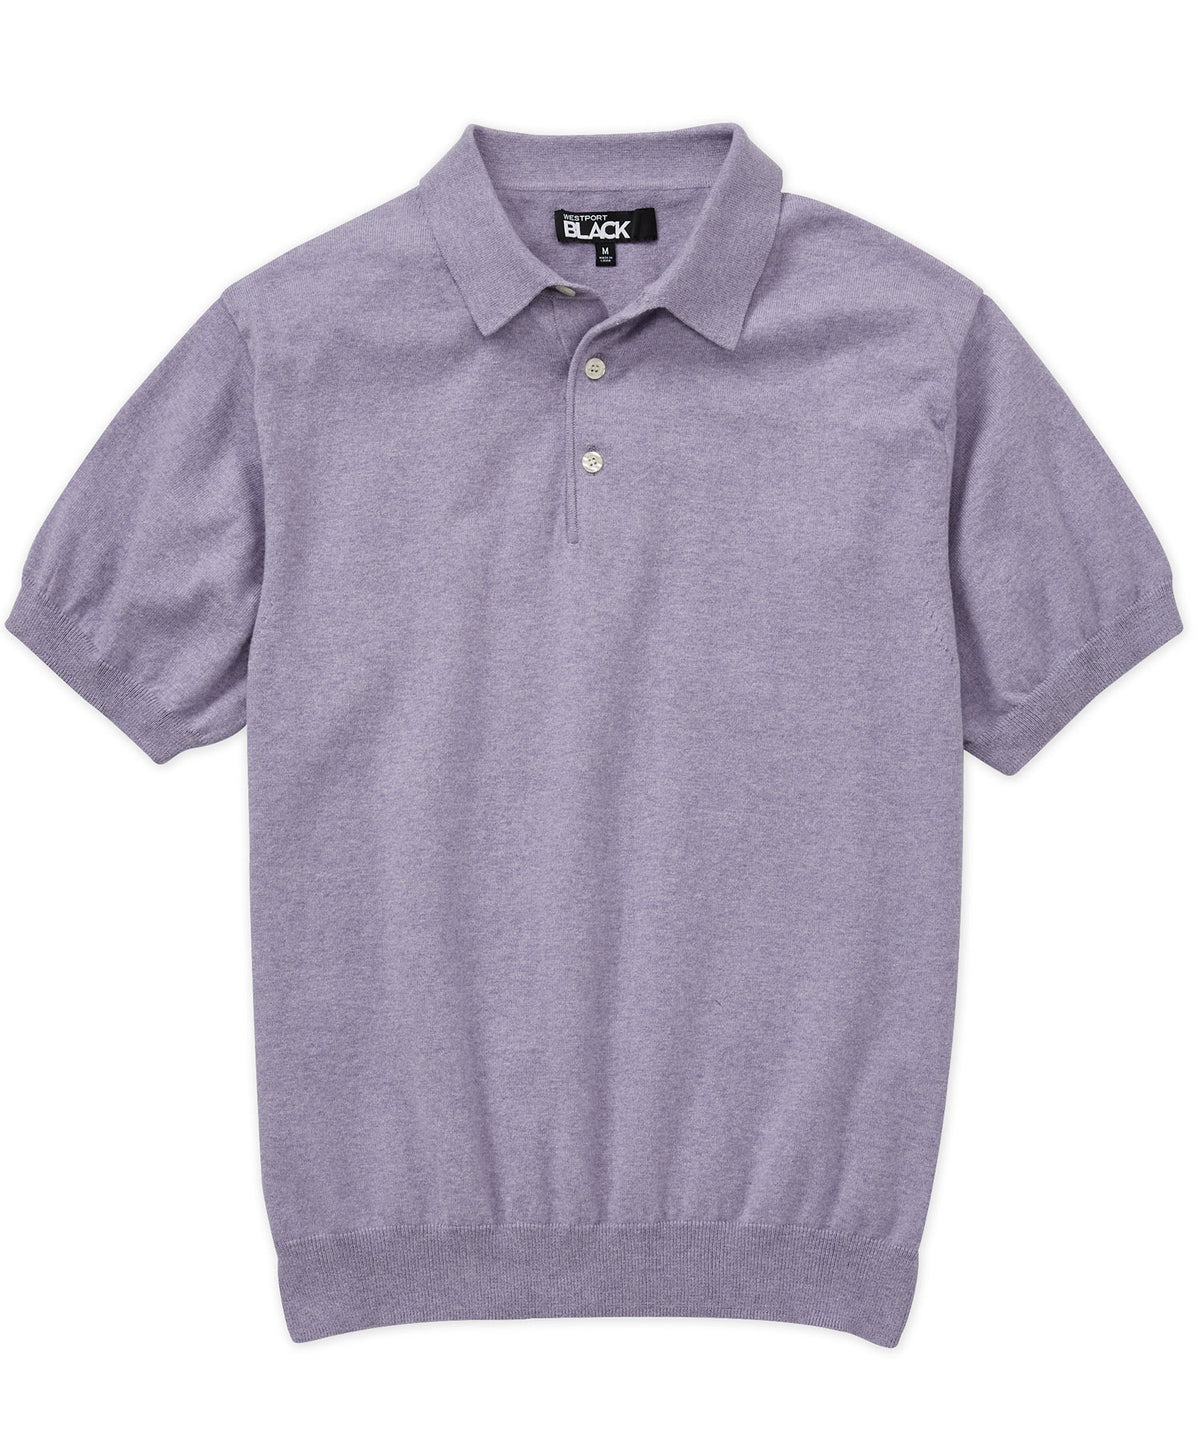 Westport Black Short Sleeve Cotton Cashmere Polo Knit Shirt